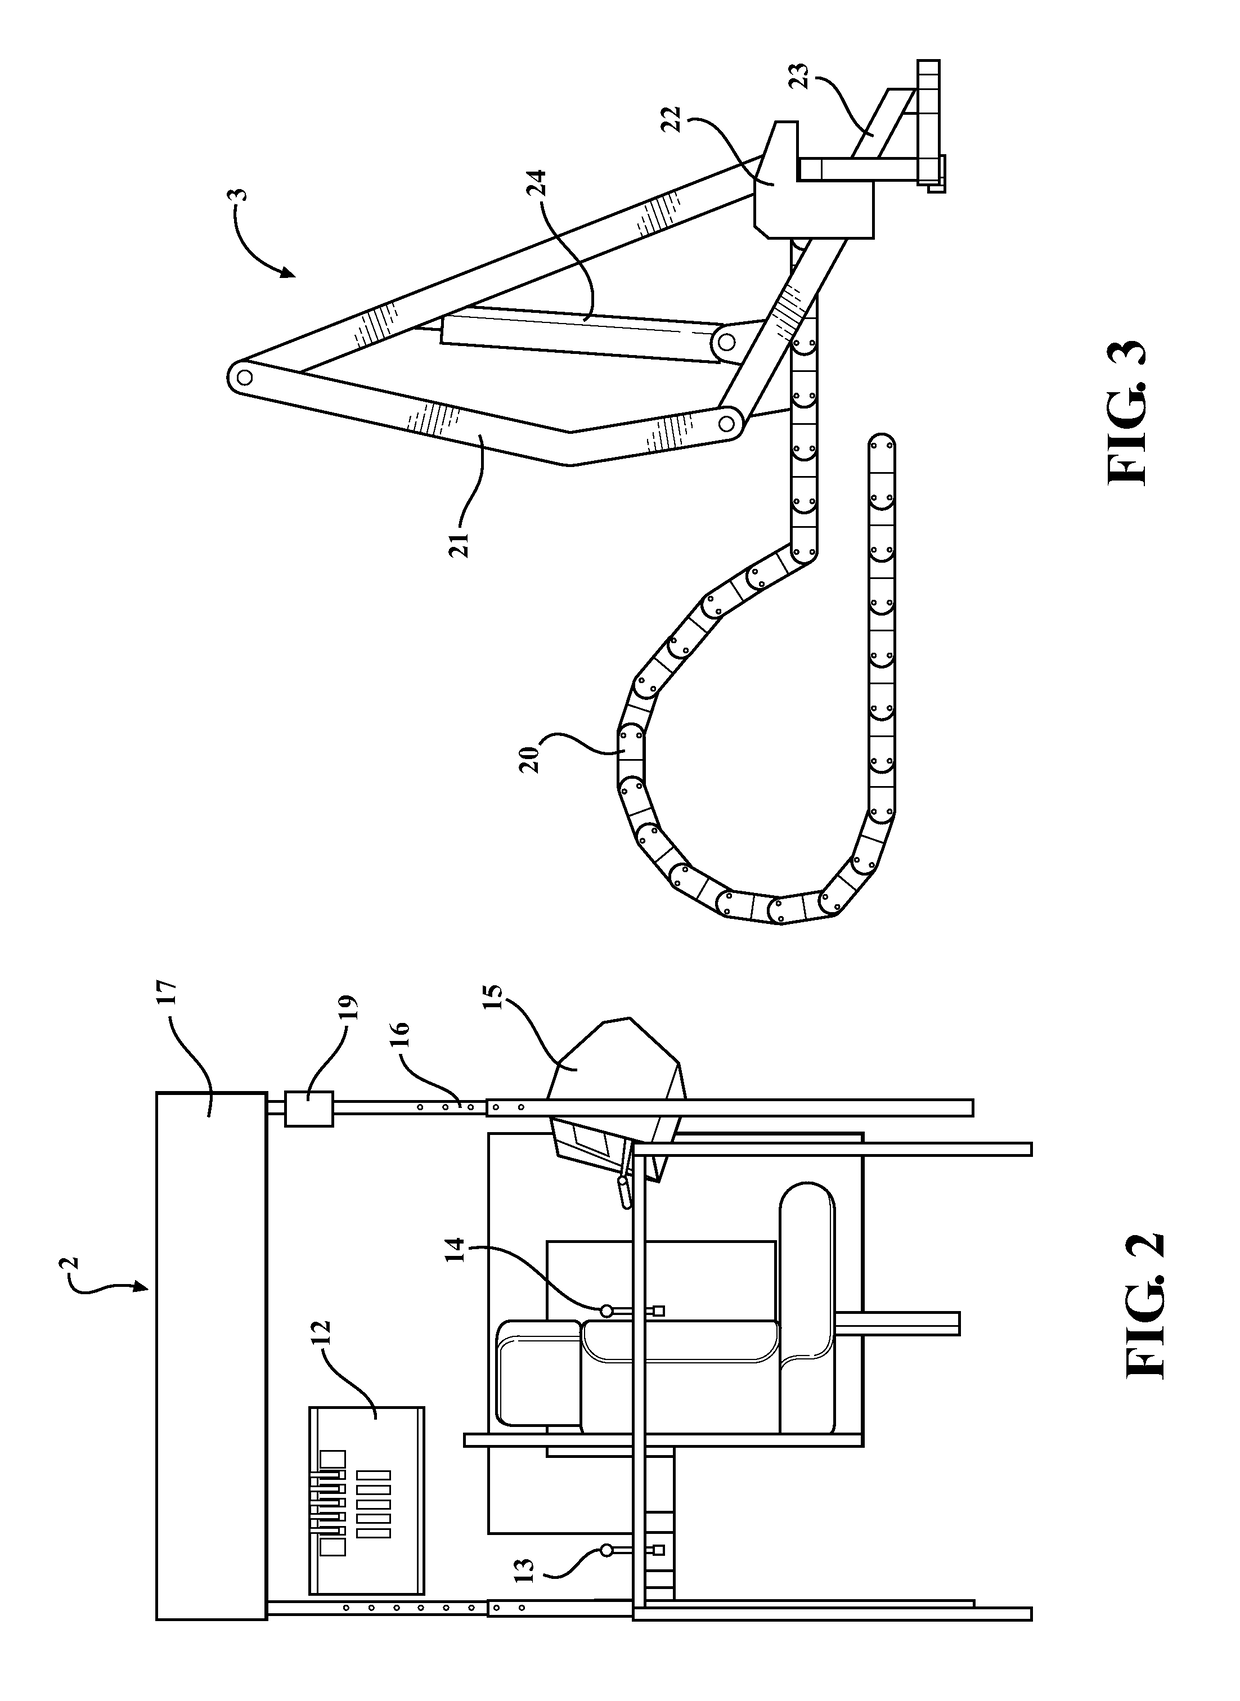 Hydraulic pipe handling apparatus